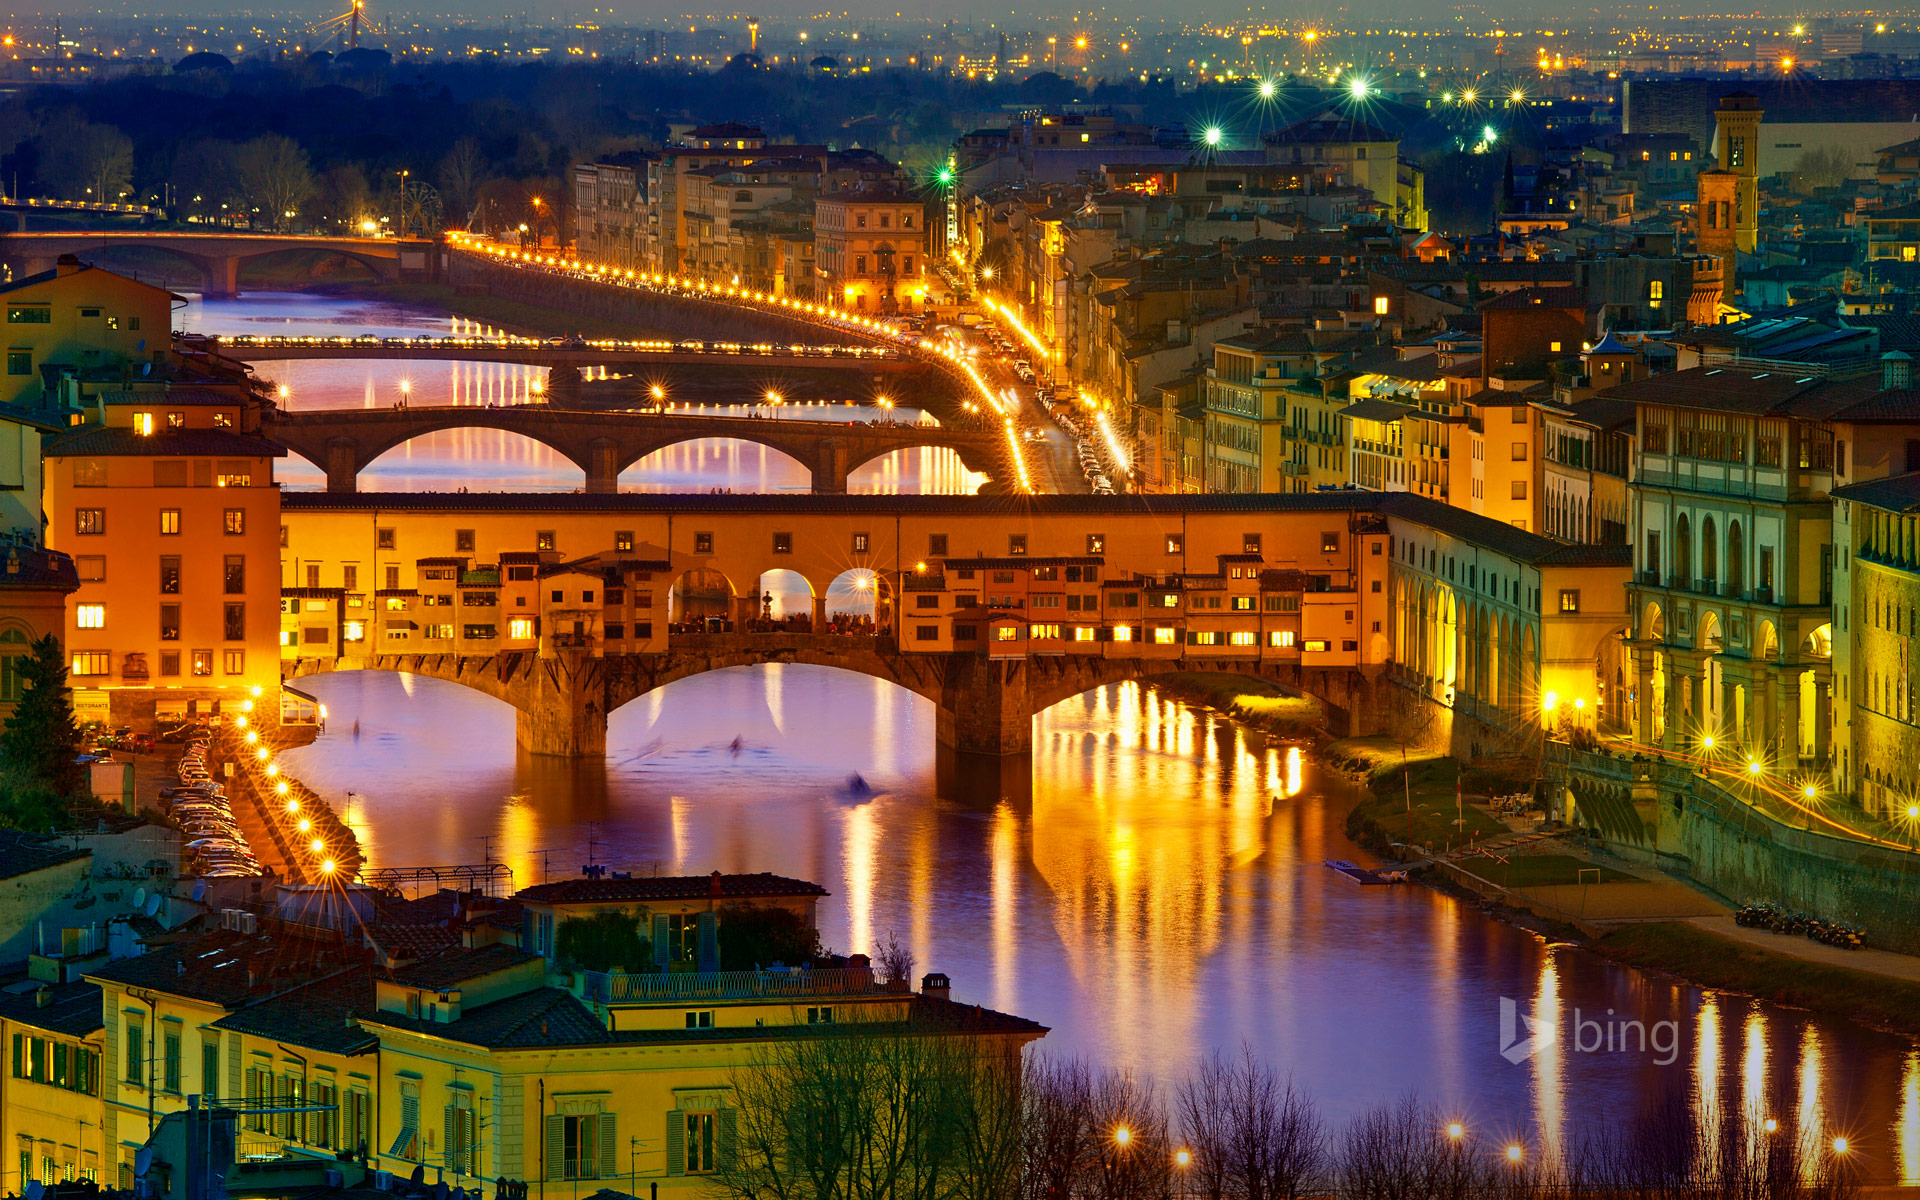 Ponte Vecchio, a bridge over the Arno River in Florence, Italy